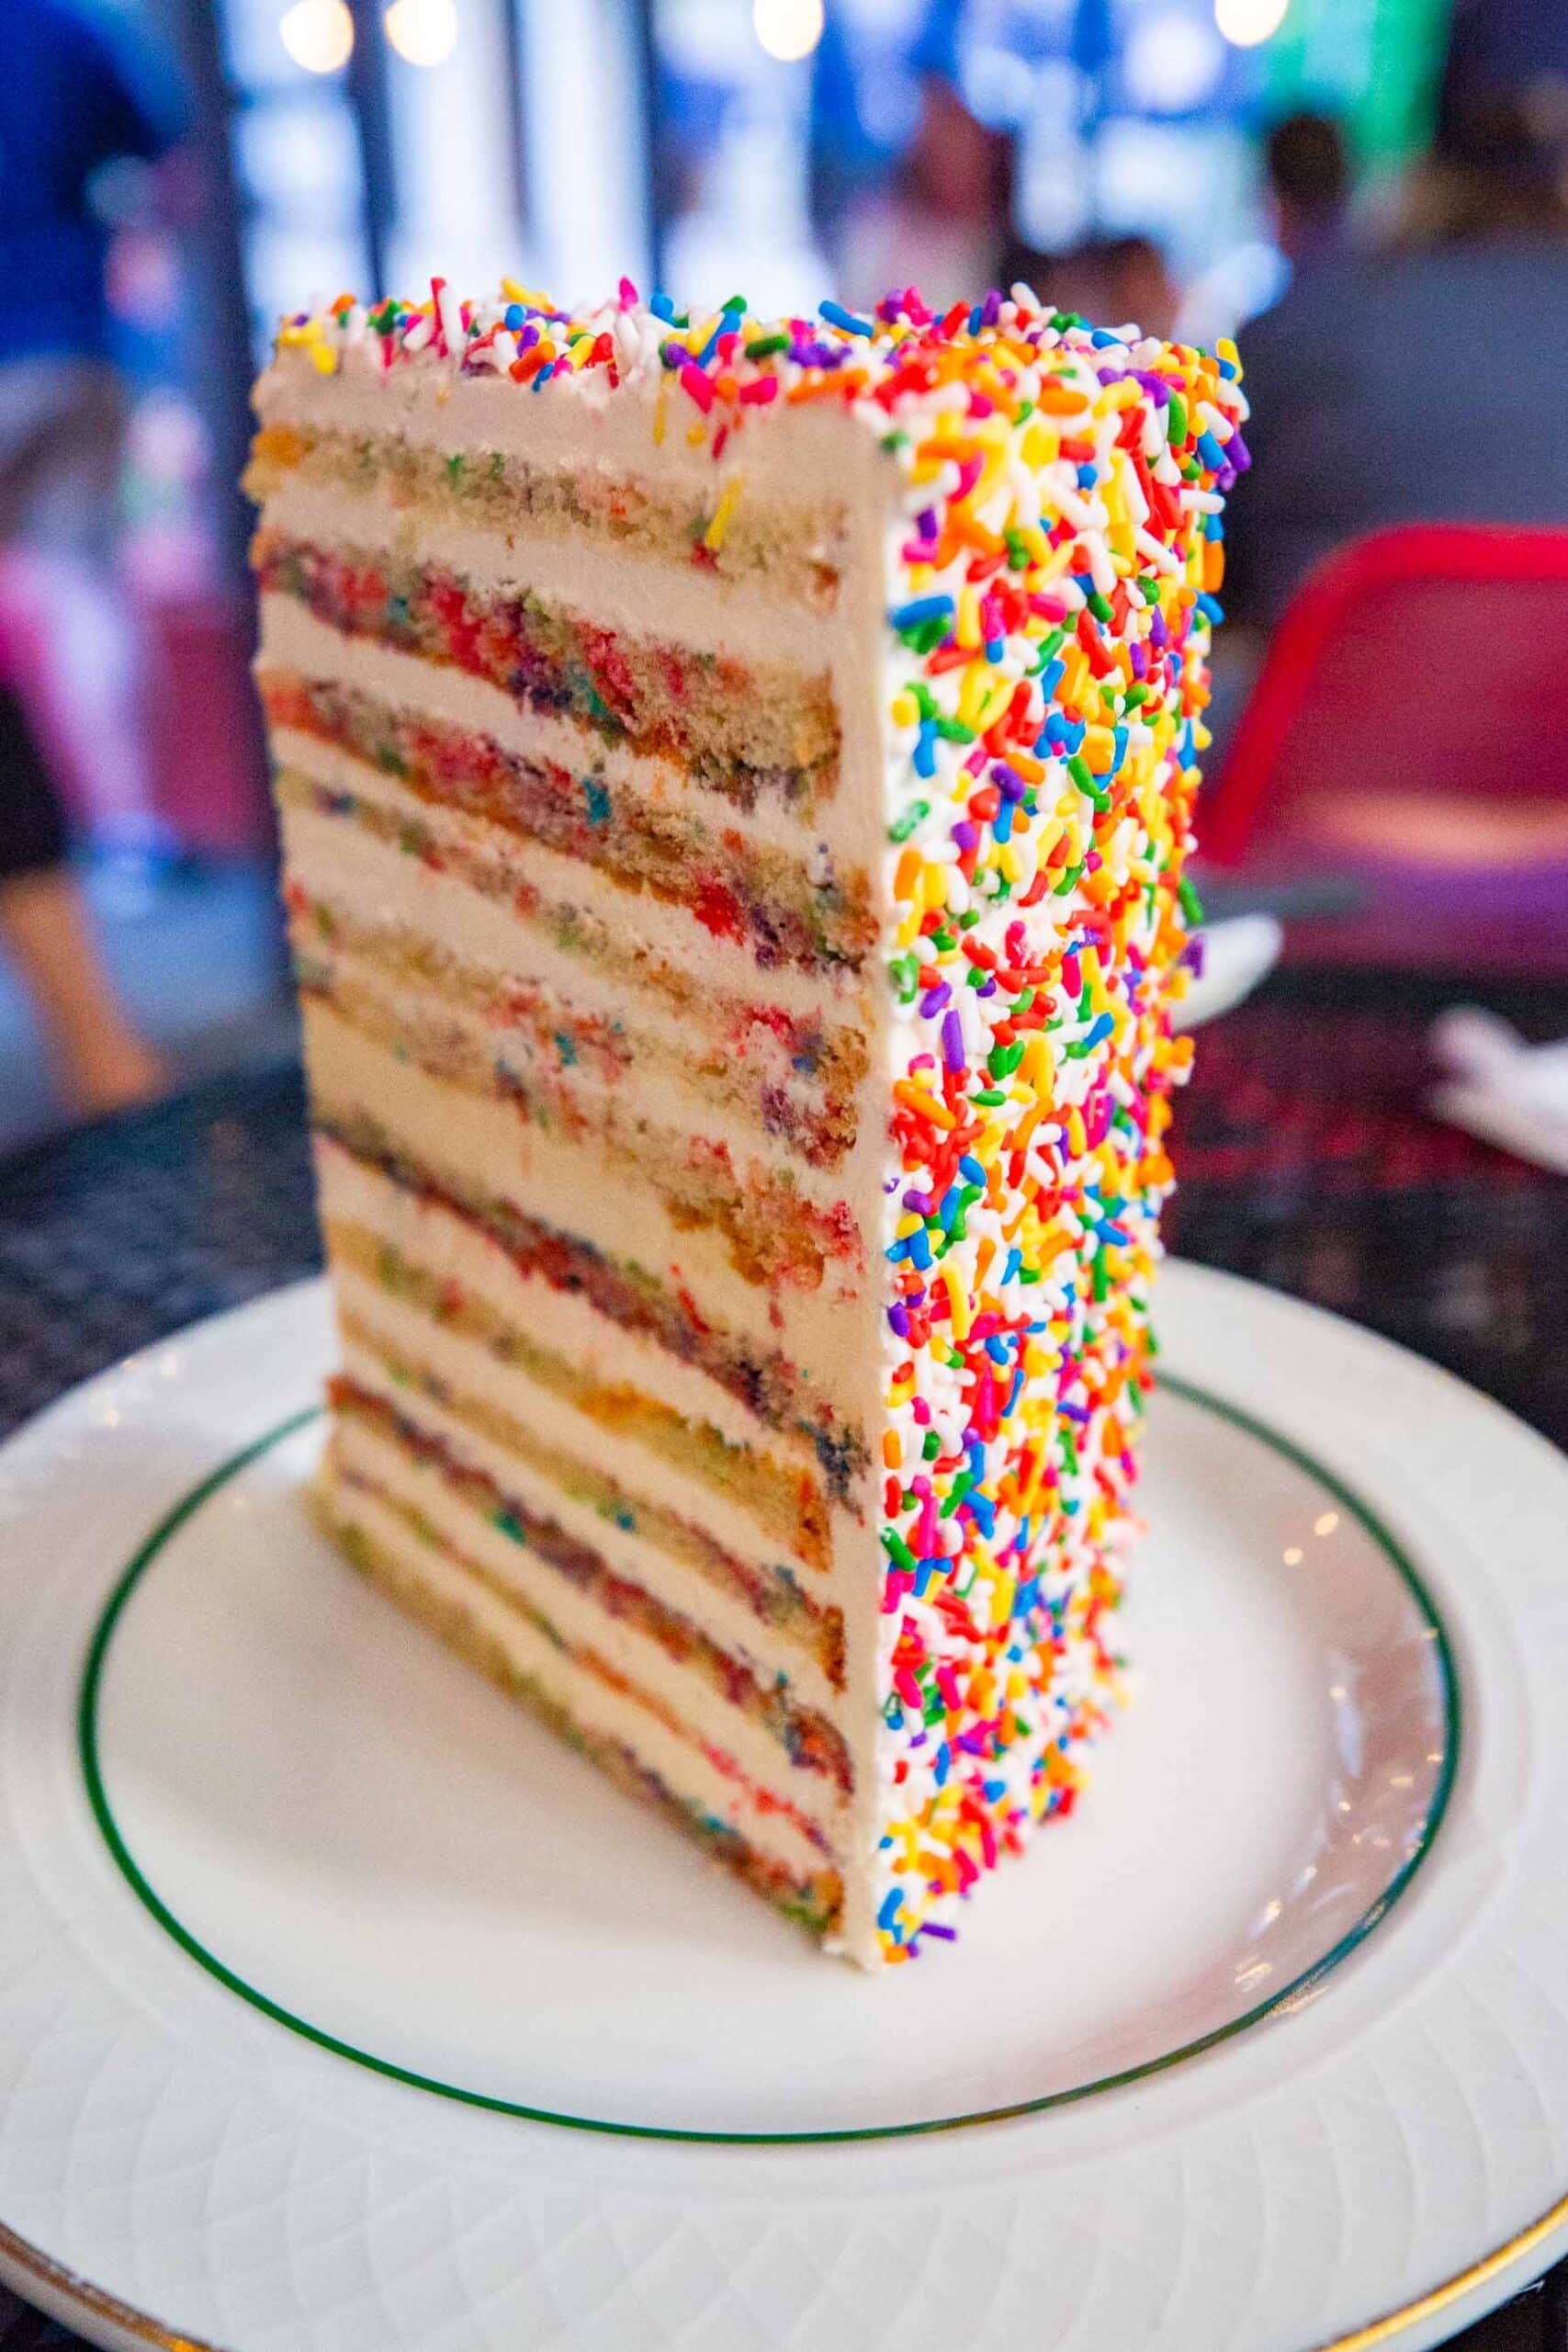 Best Birthday Cakes in New York City